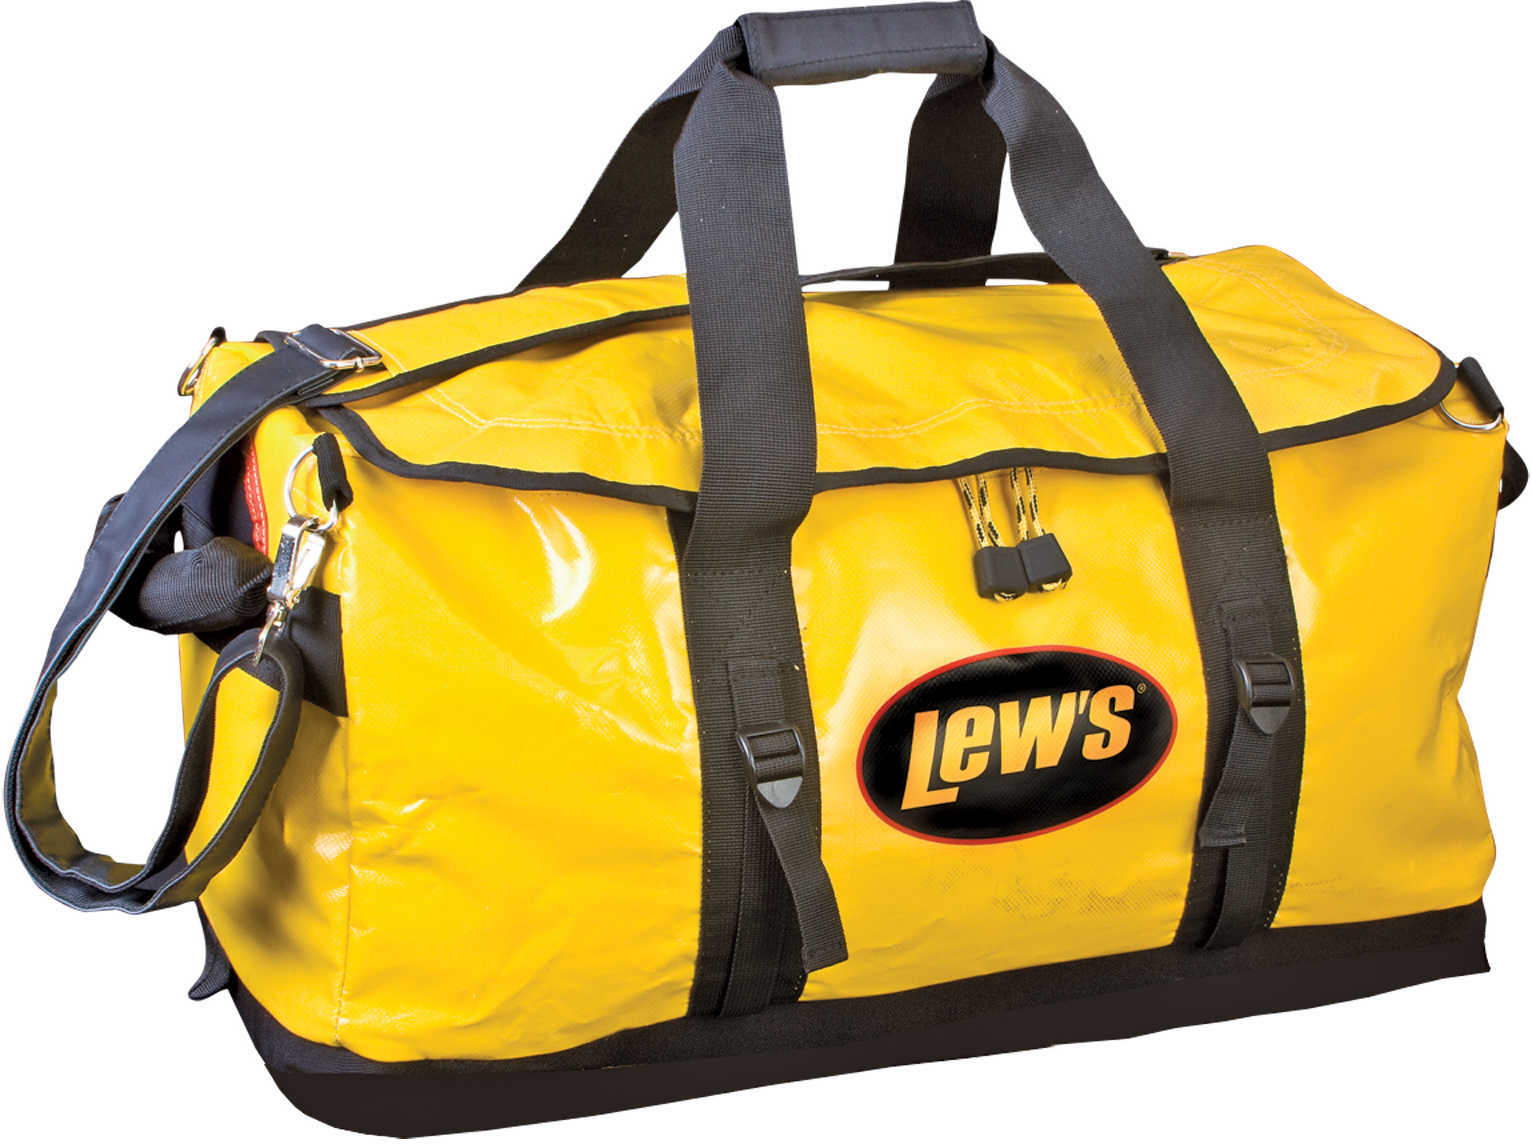 Lews Speed Boat Bag Heavy Duty Water Resistant PVC Md#: B241212